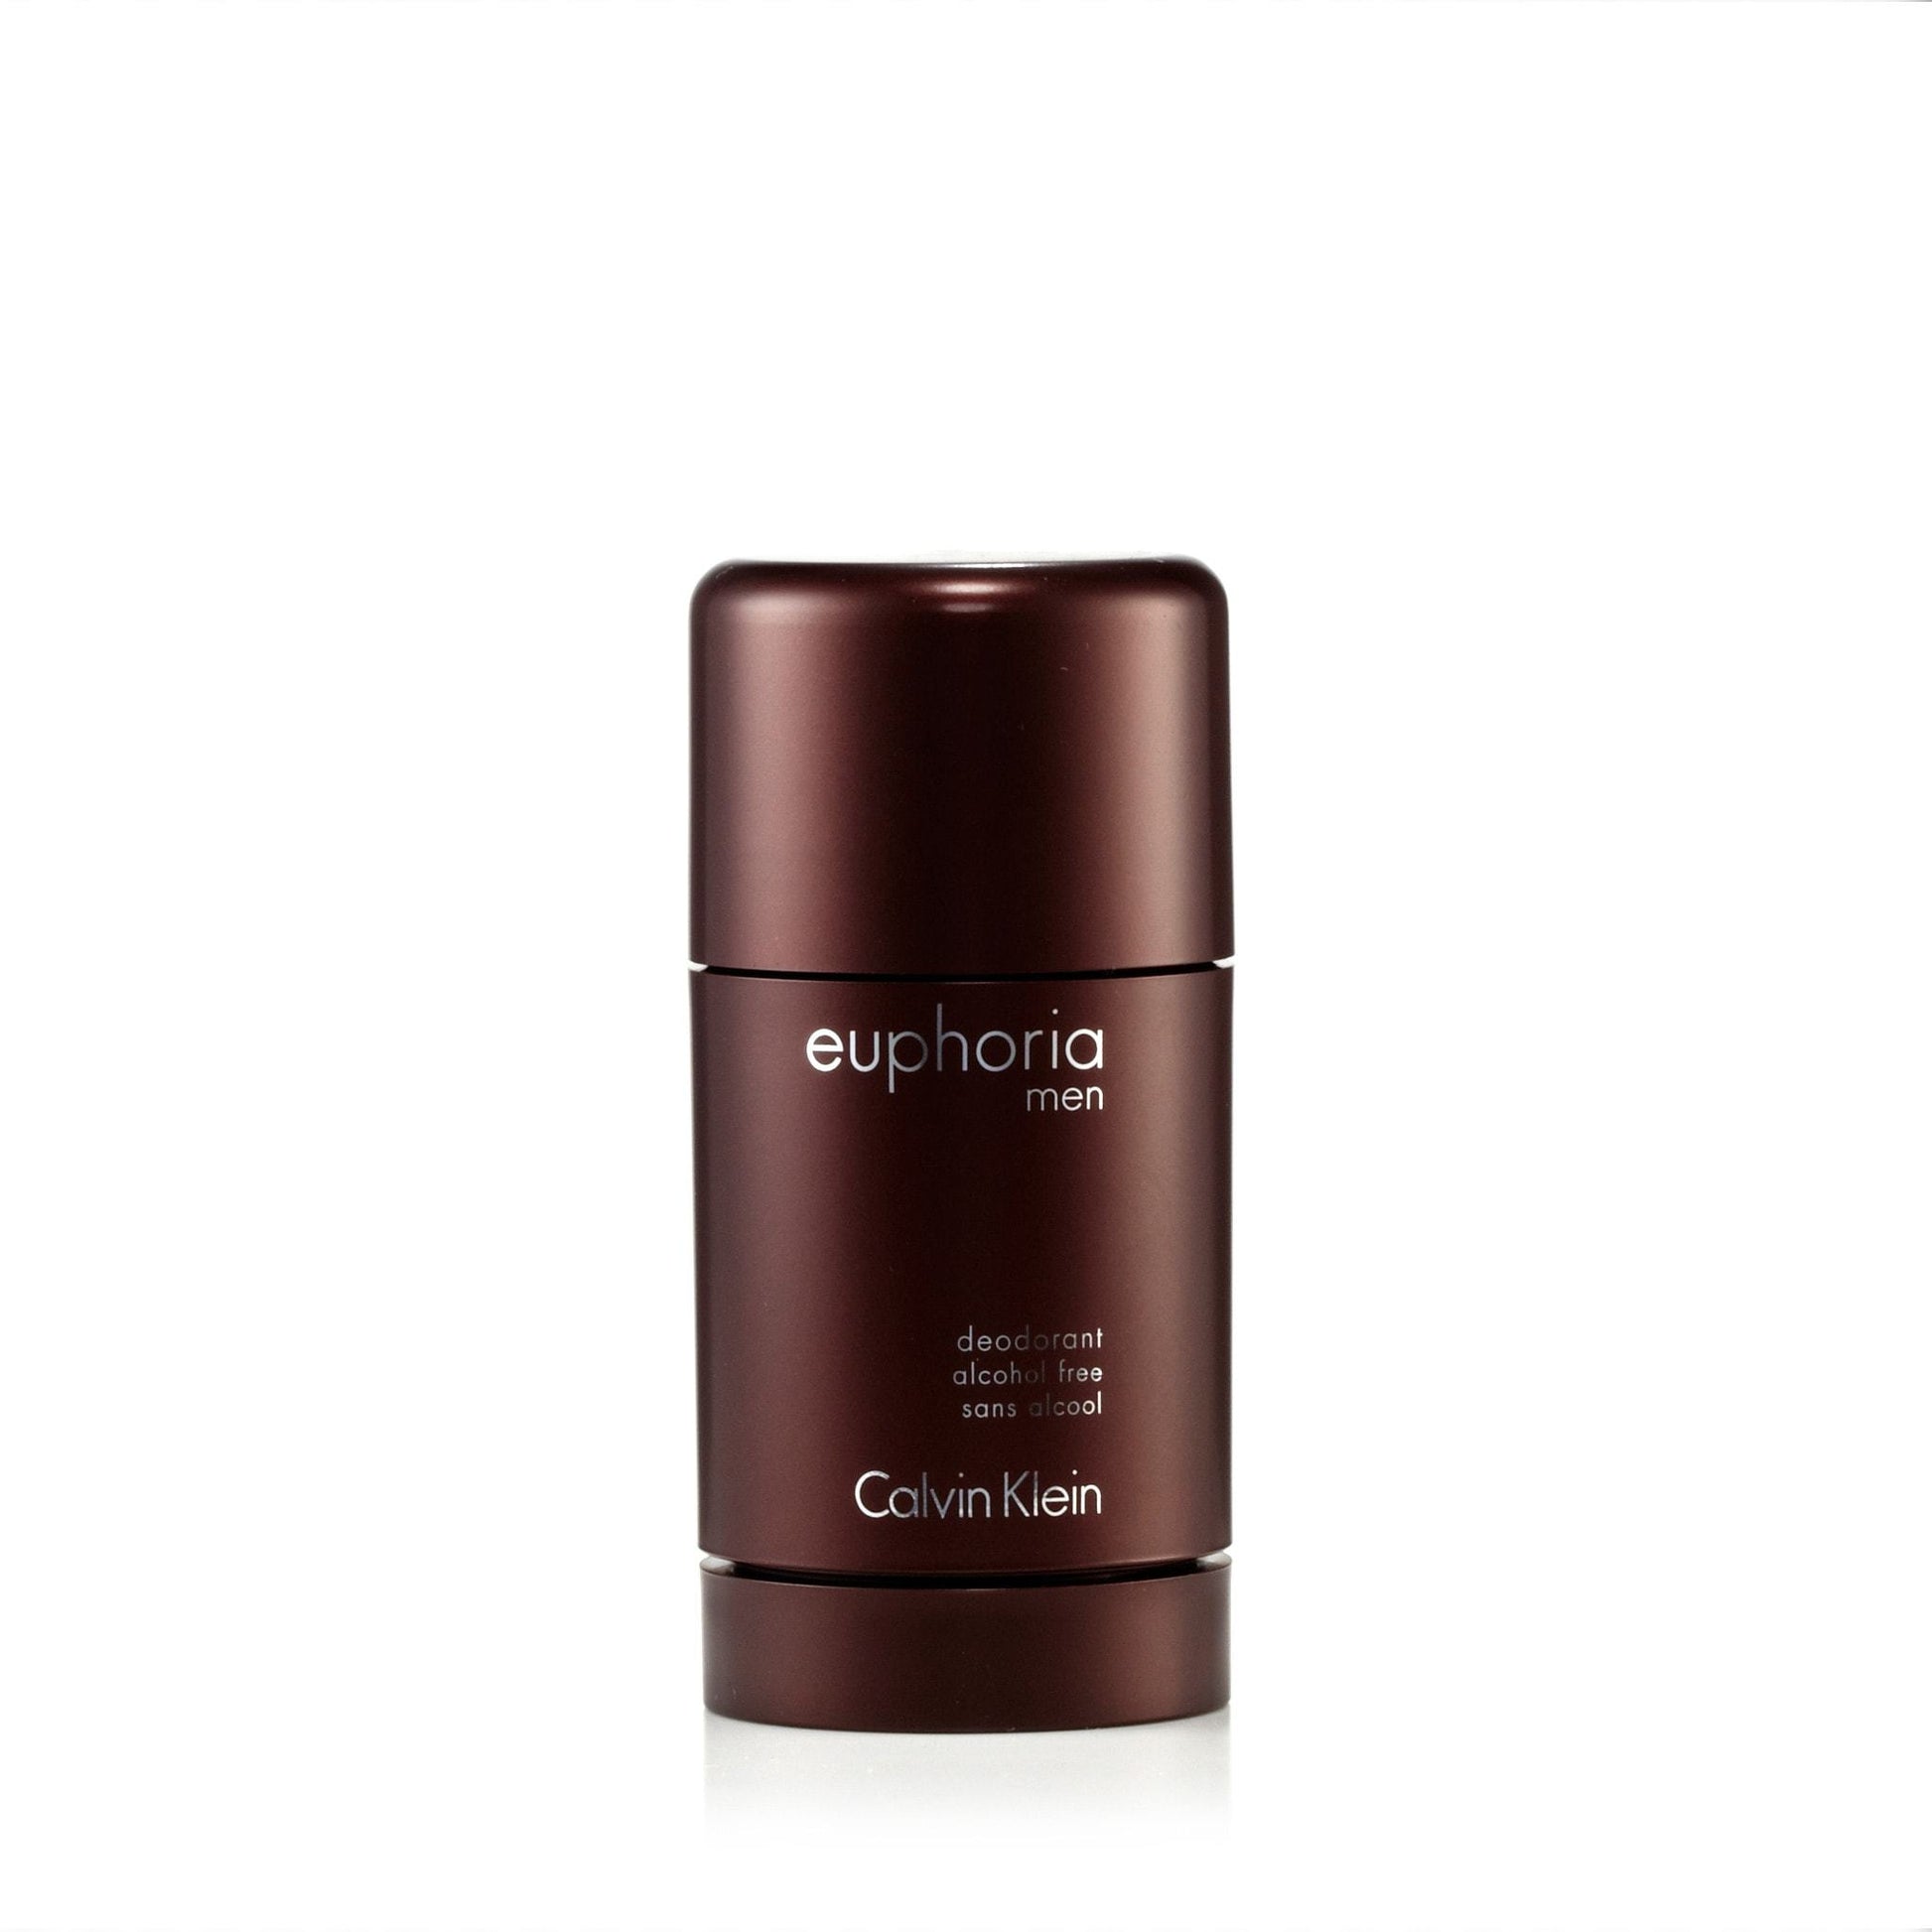 Euphoria Deodorant for Men by Calvin Klein, Product image 1